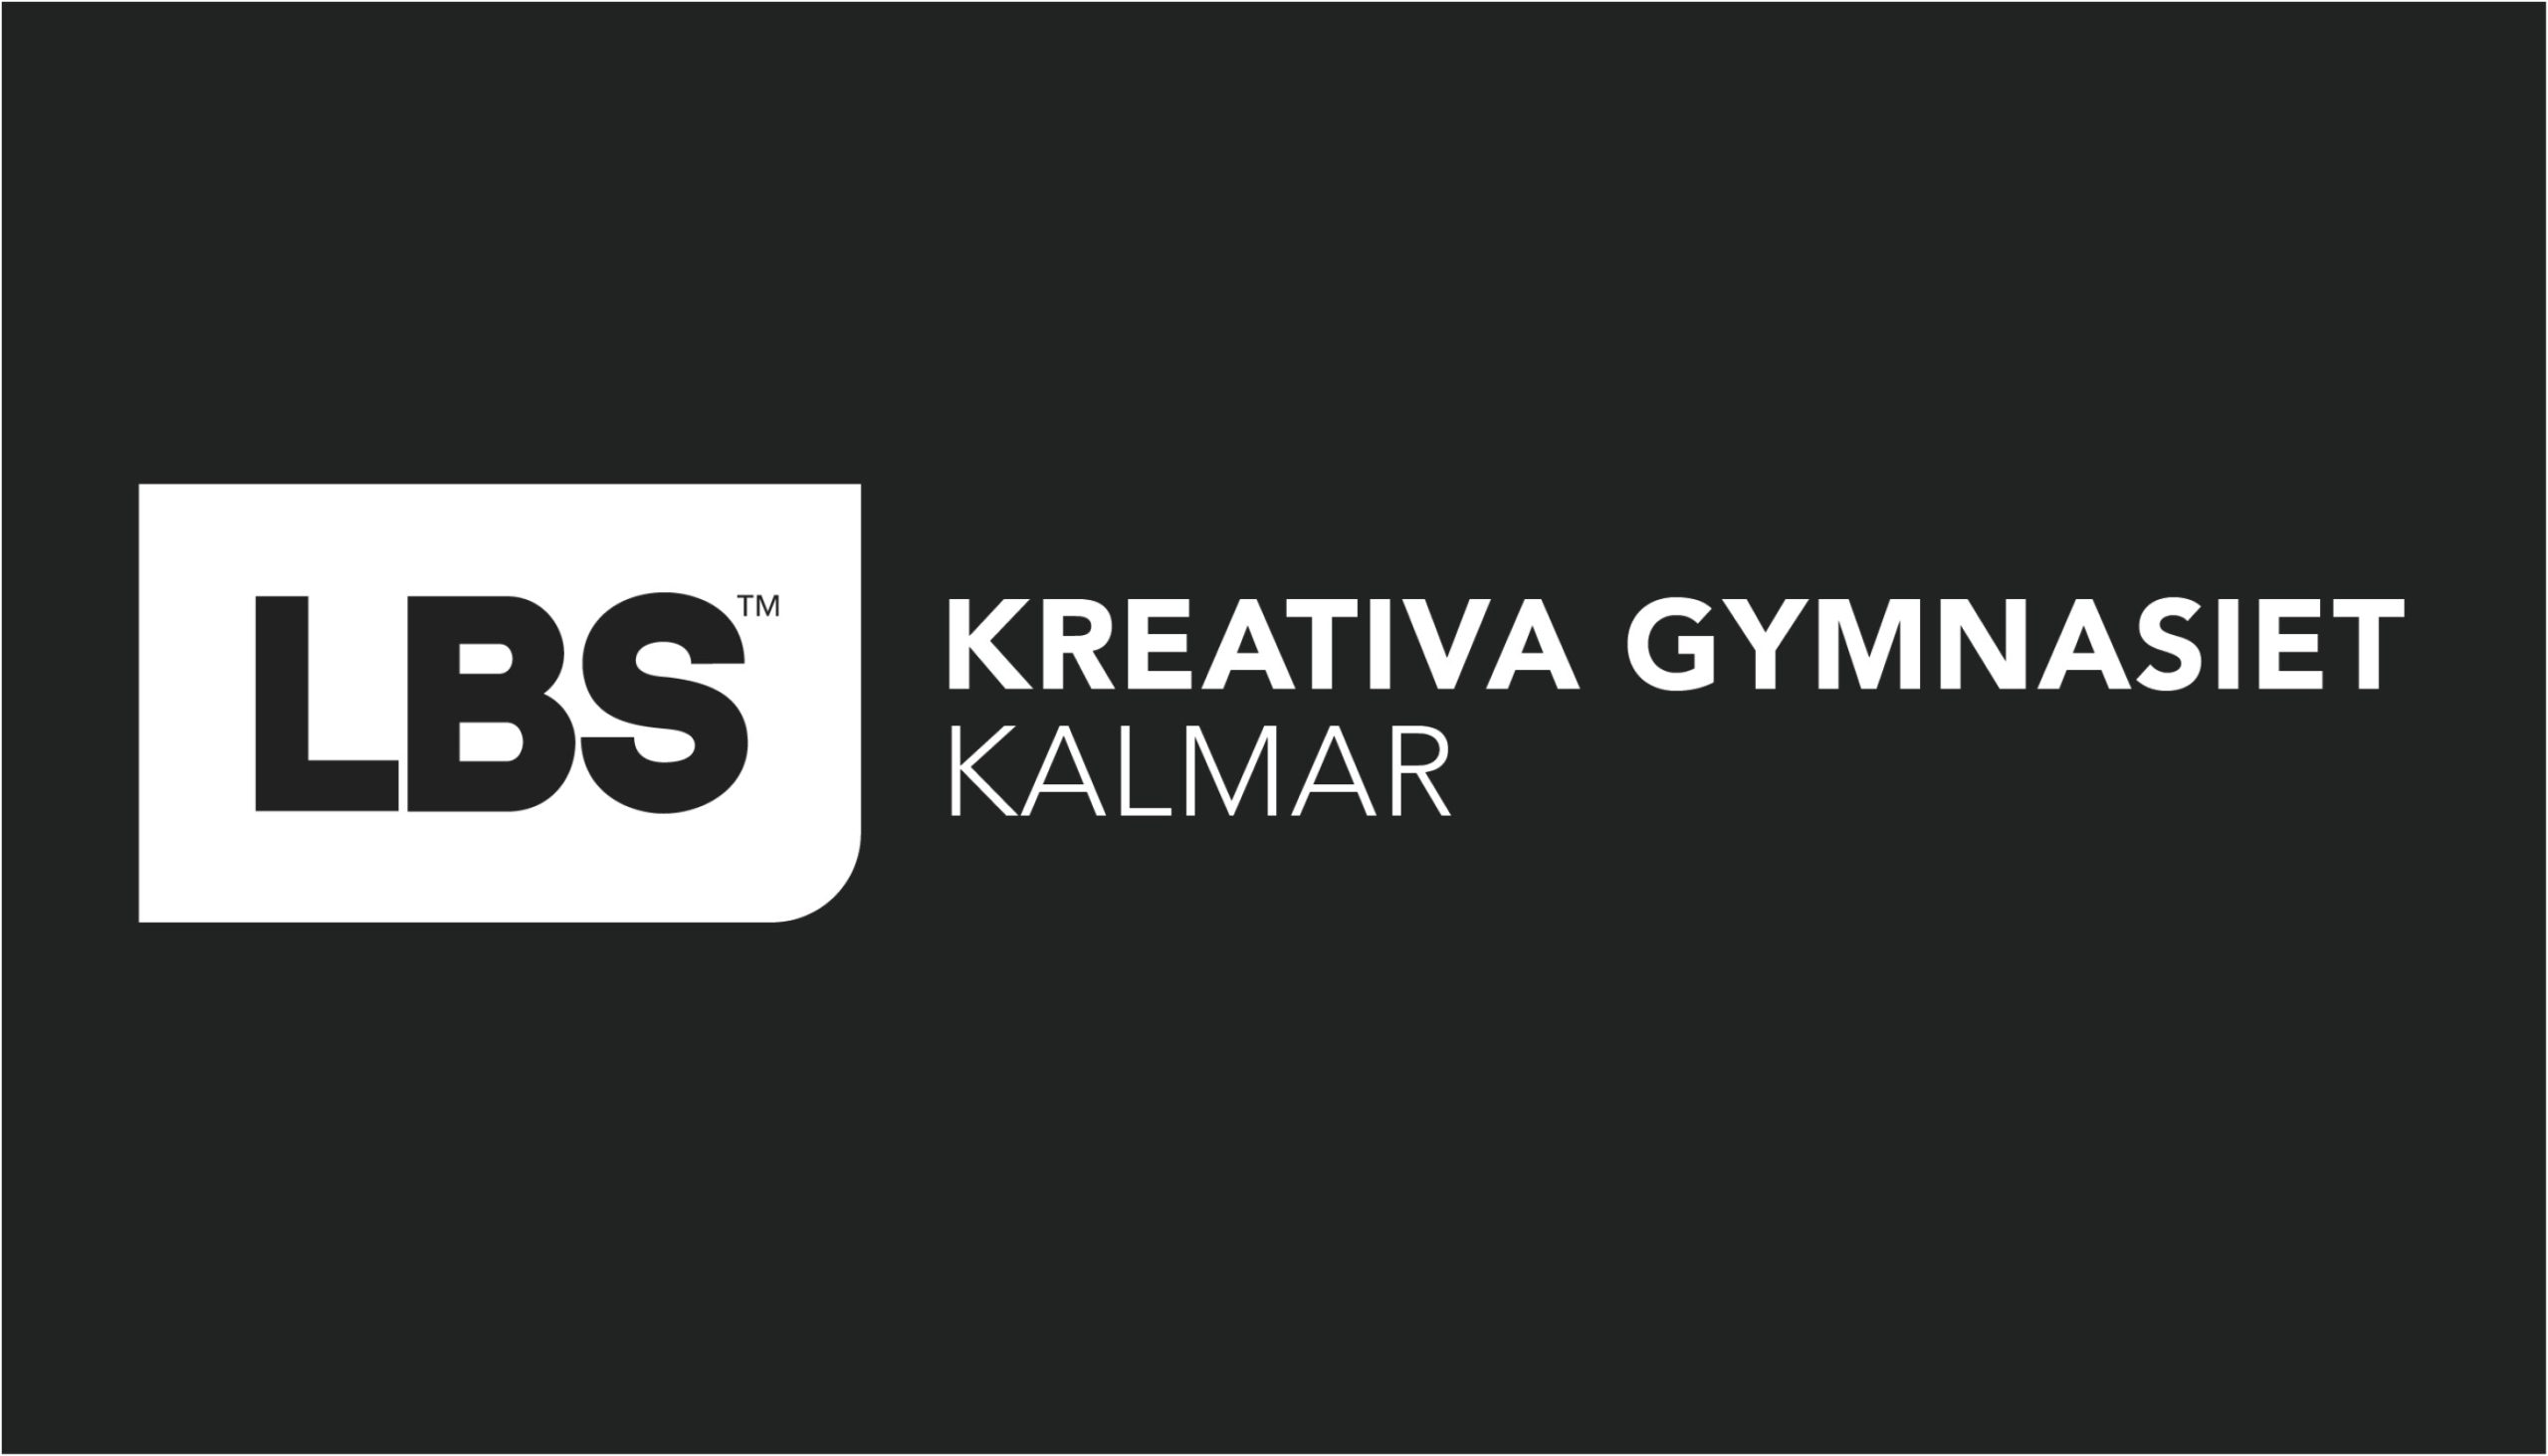 LBS Kreativa Gymnasiet Kalmar.